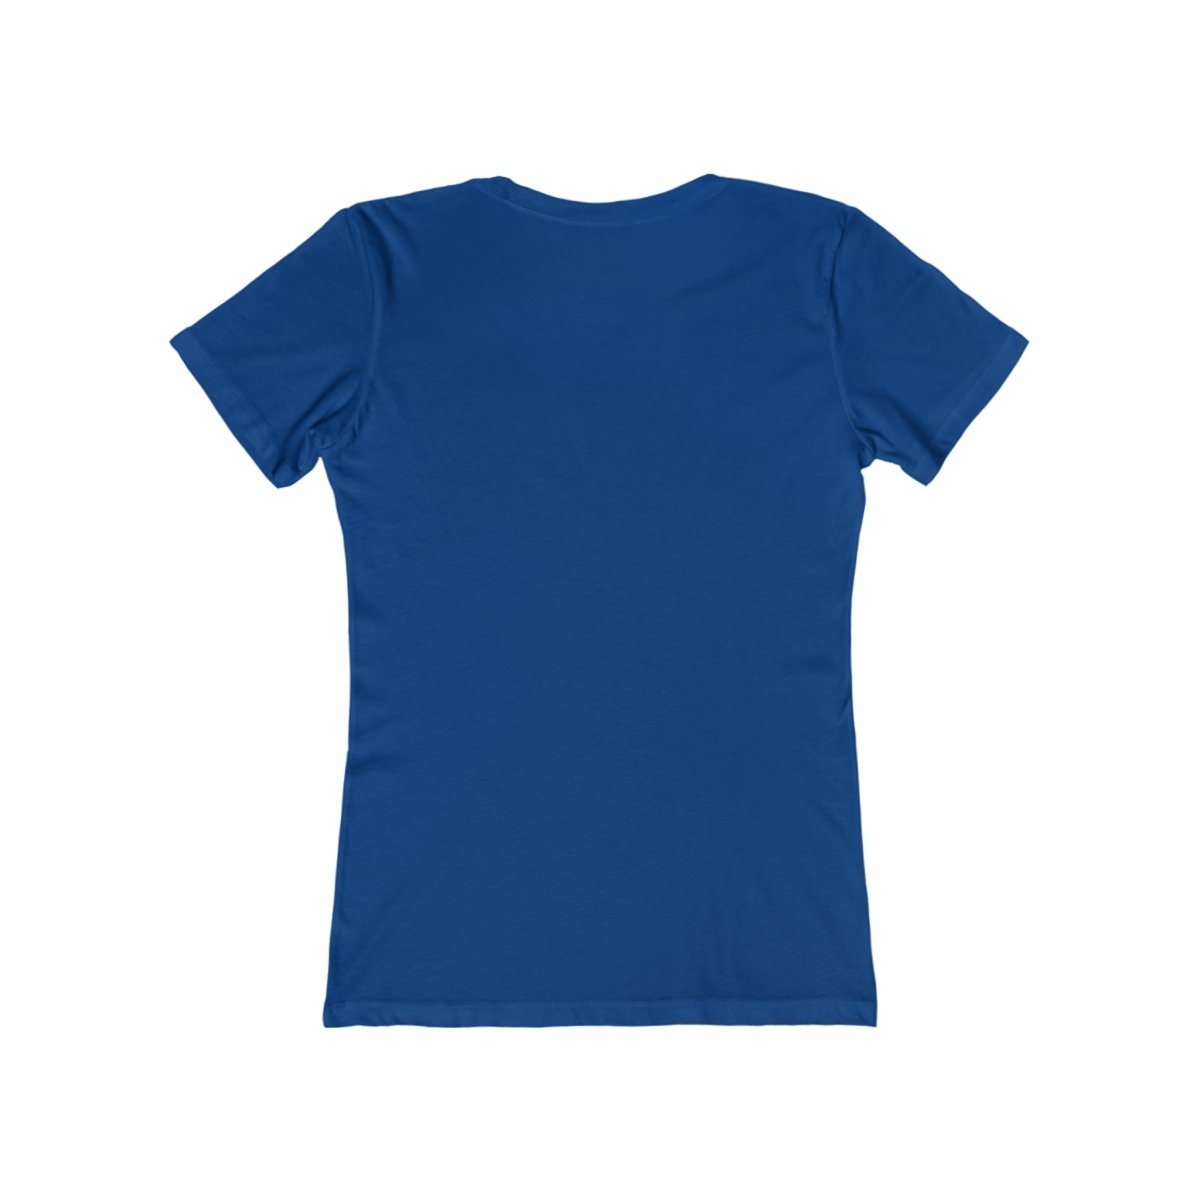 Earn Your Stripes Women's Premium Slim-Fit T-Shirt, Razzle Dazzle, Leadership Training